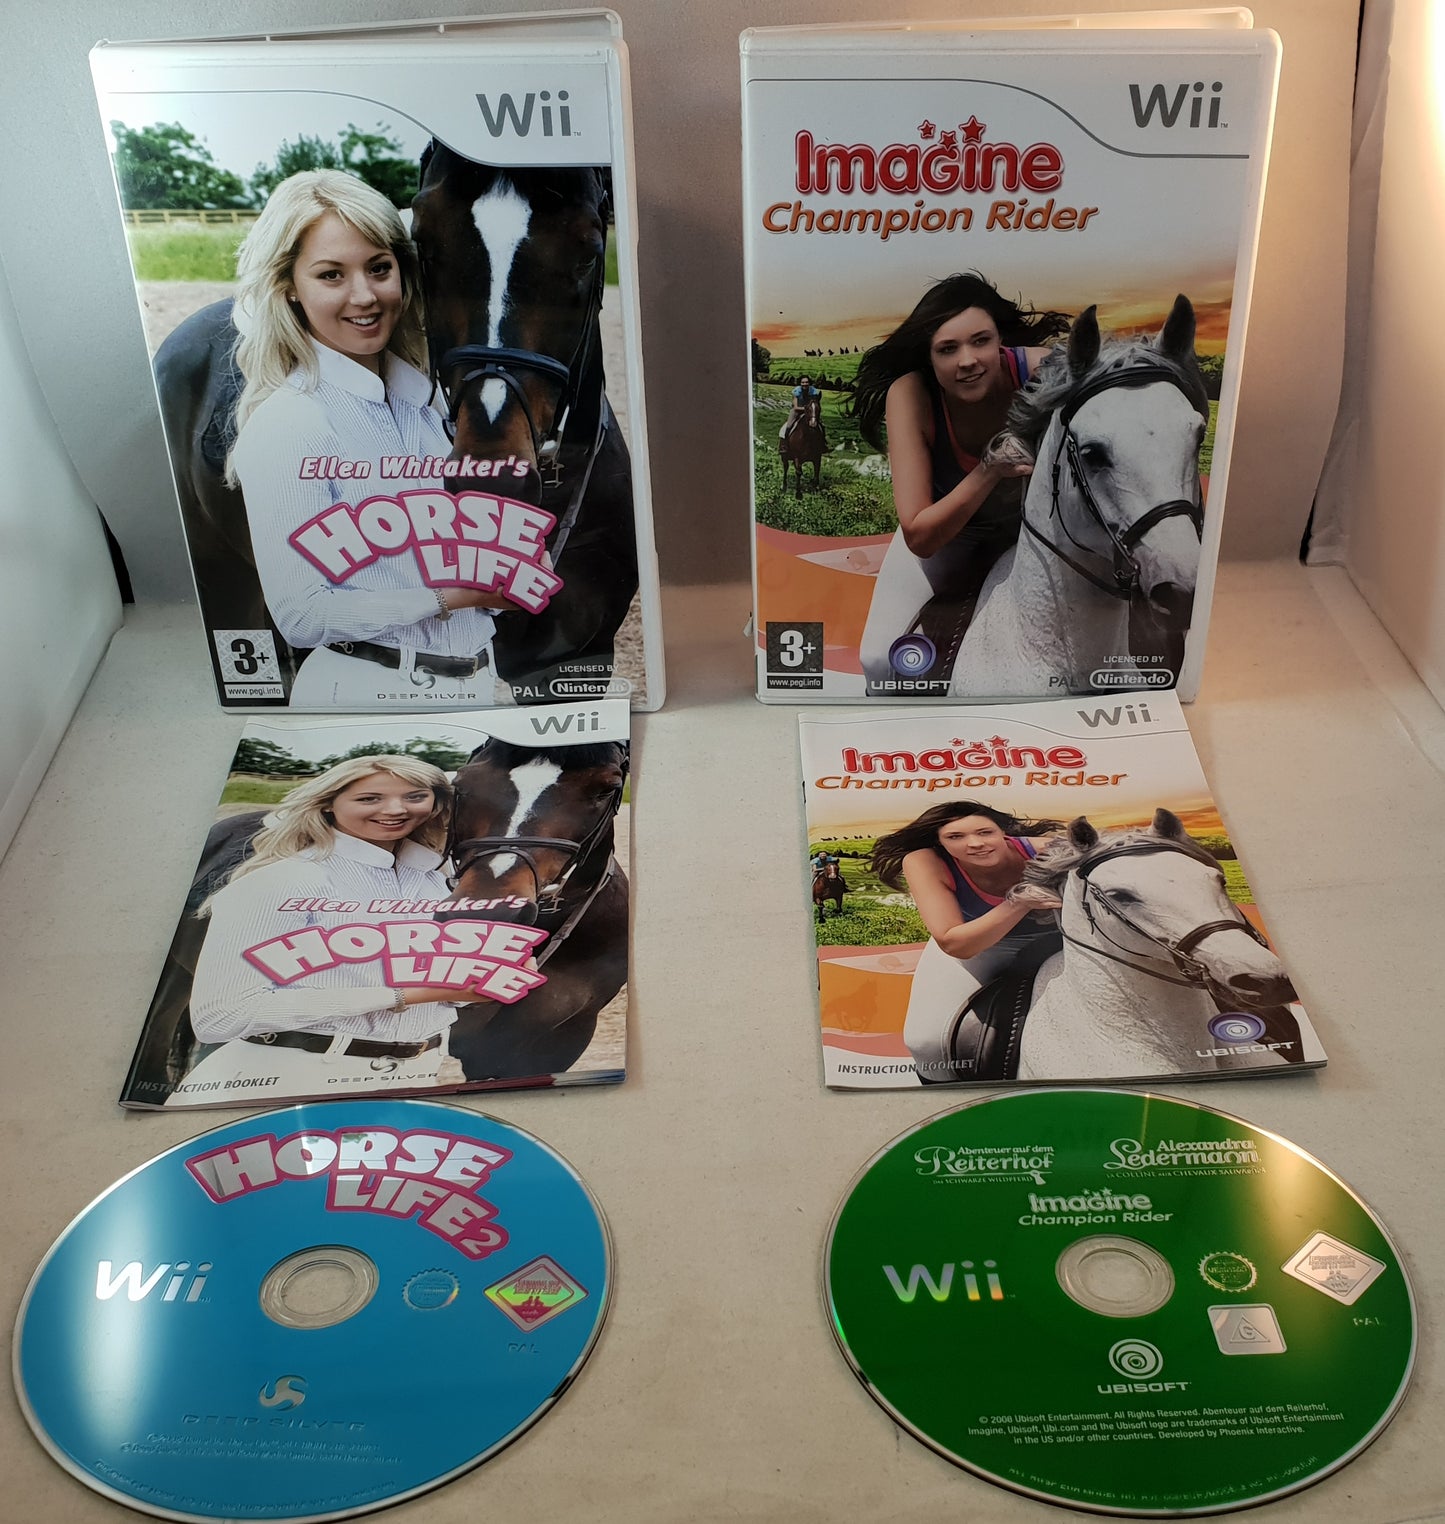 Ellen Whitaker's Horse Life & Imagine Champion Rider Nintendo Wii Game Bundle